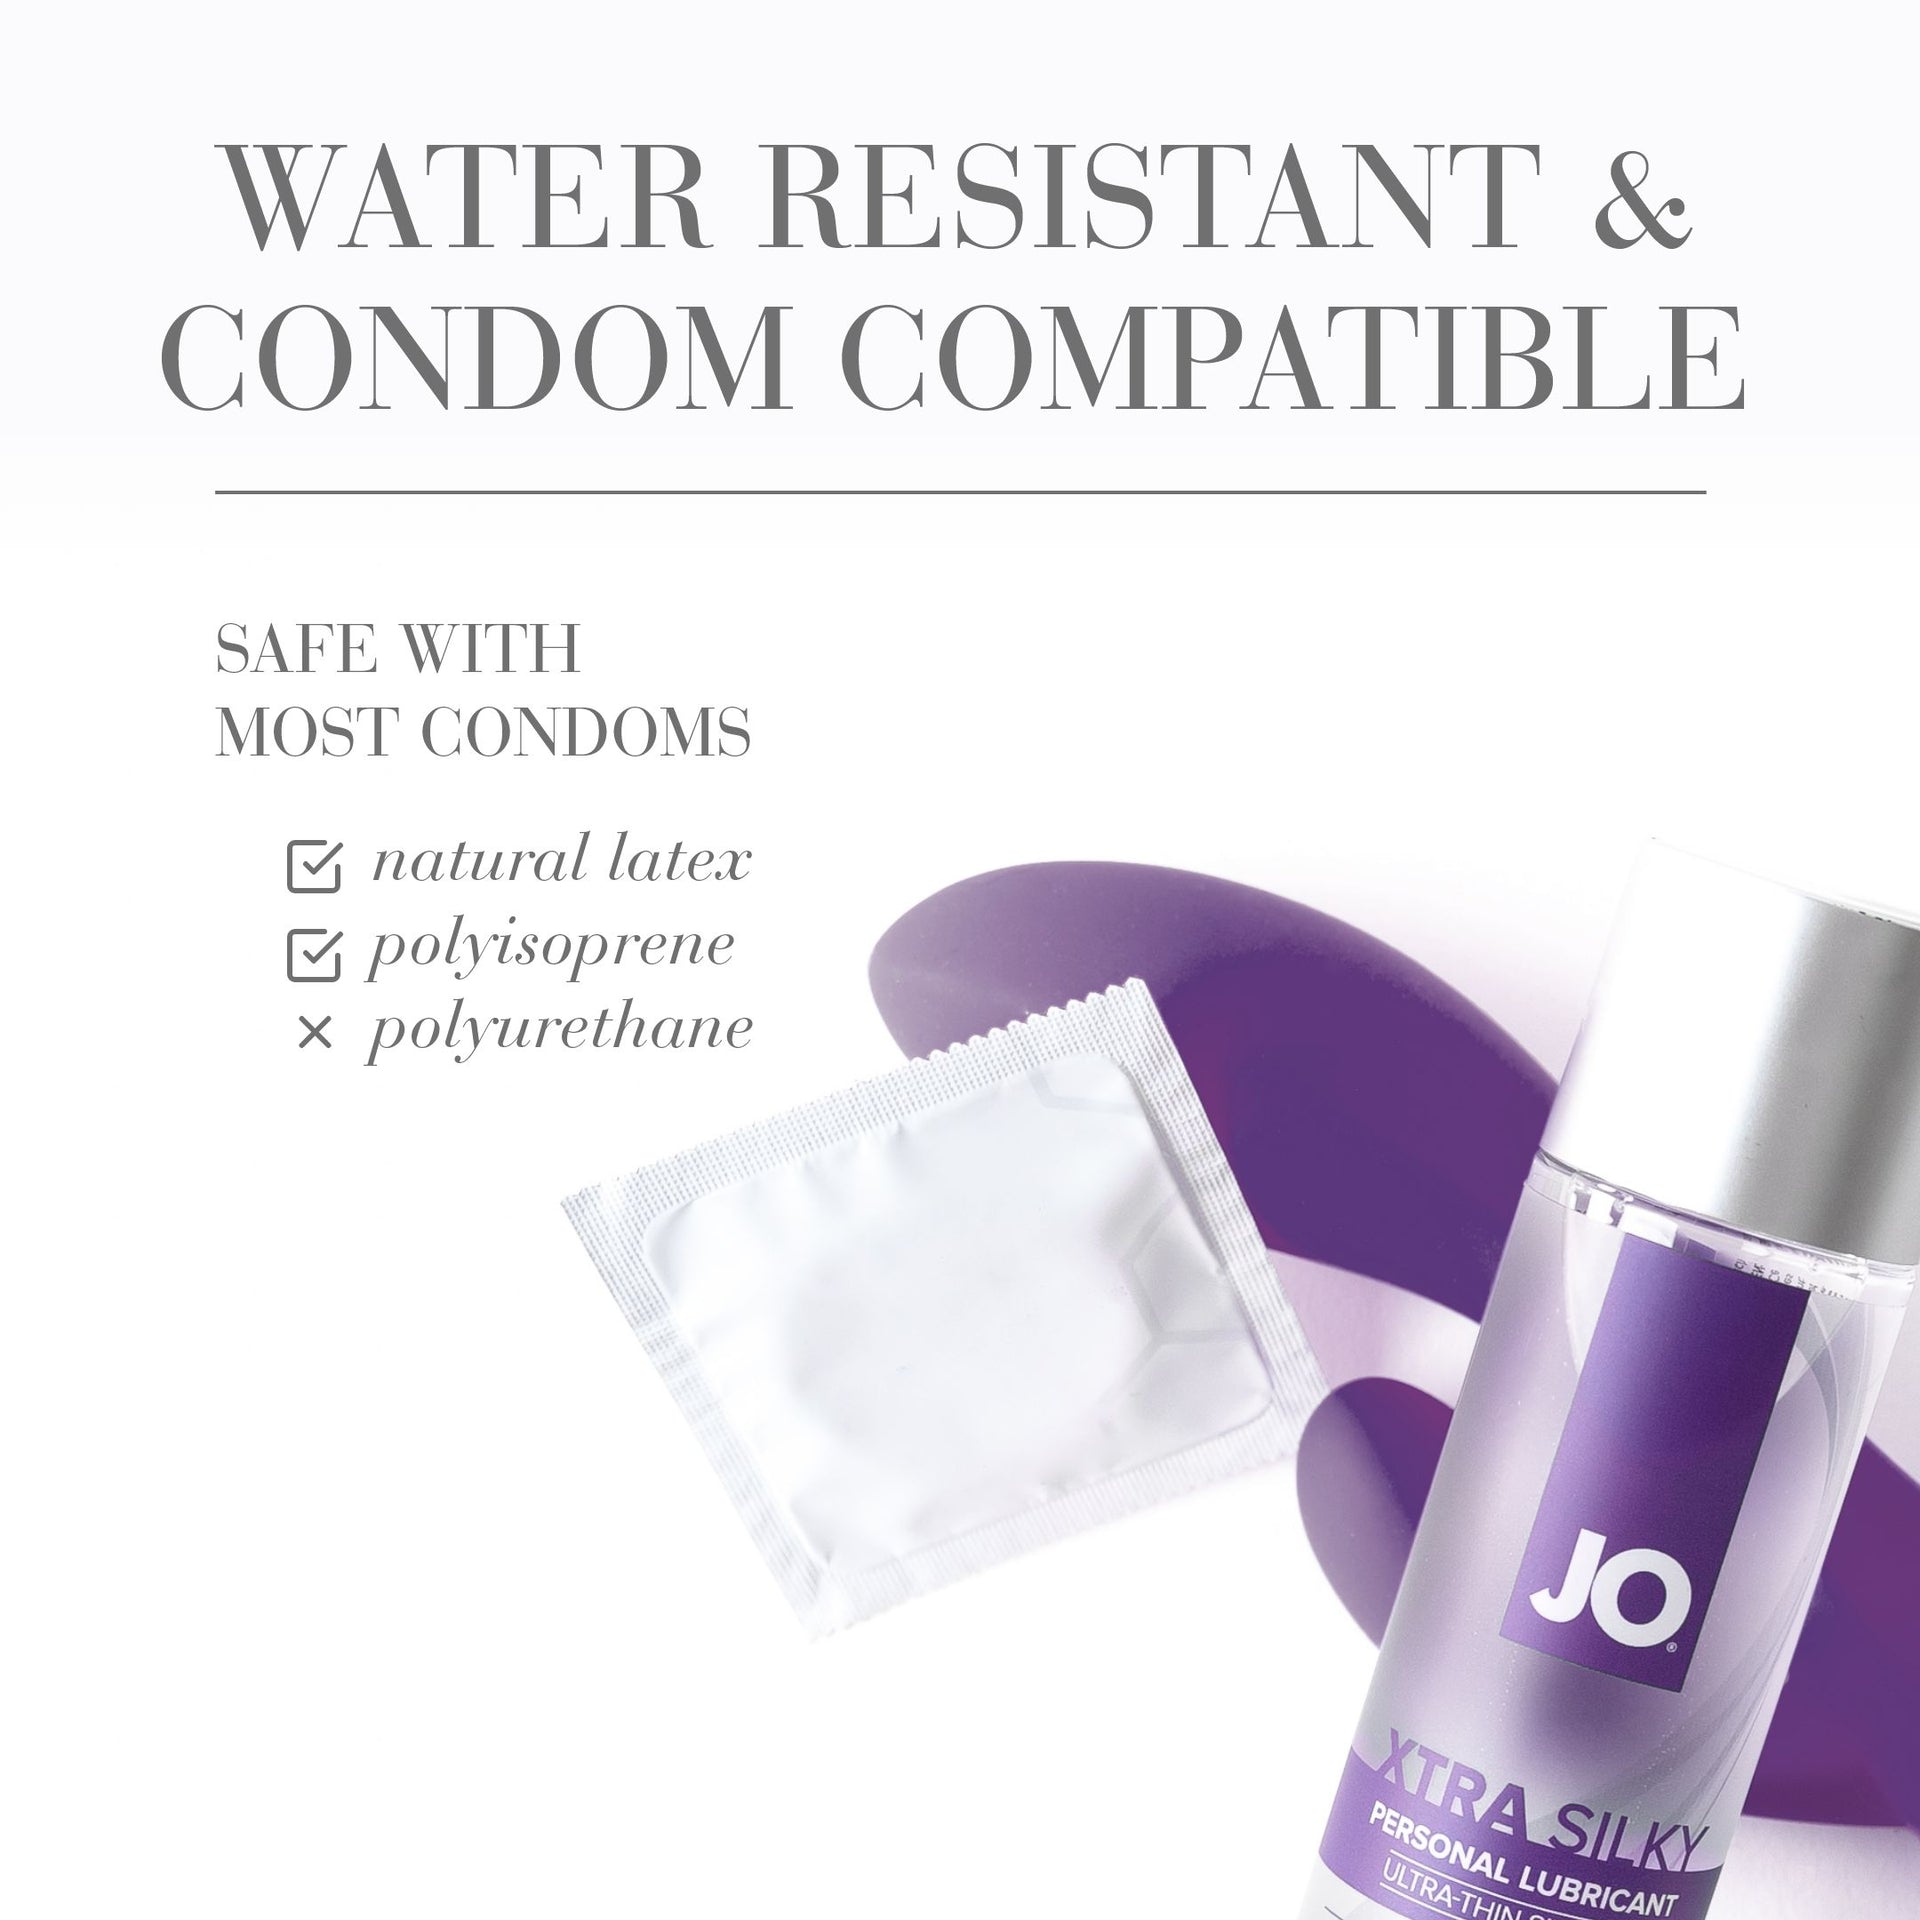 xtra silky lubricant condom compatible